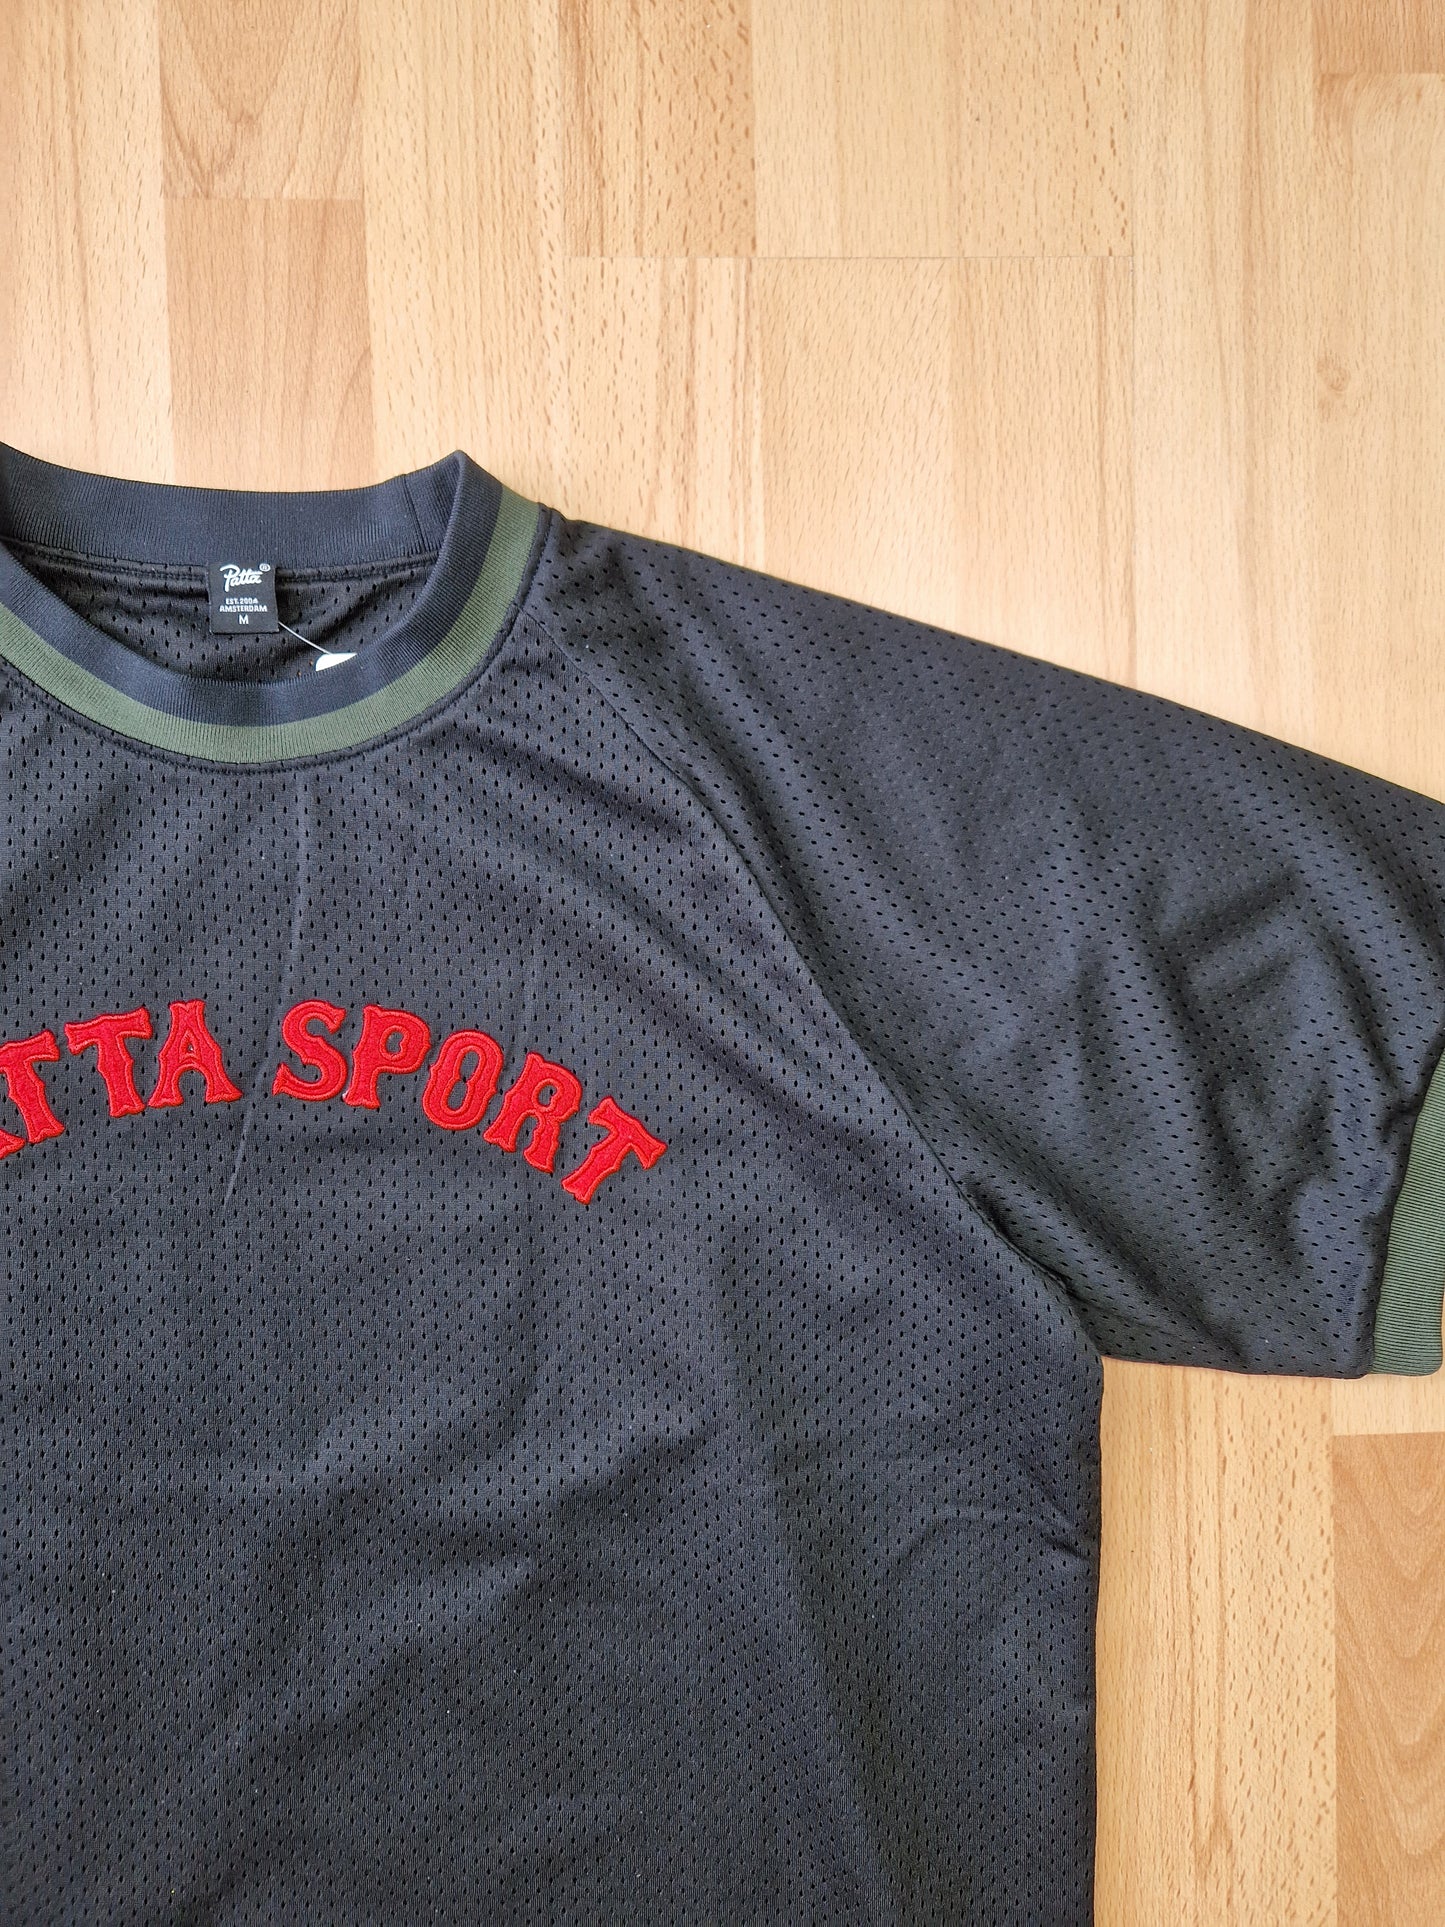 Patta Sport Baseball Jersey (M)